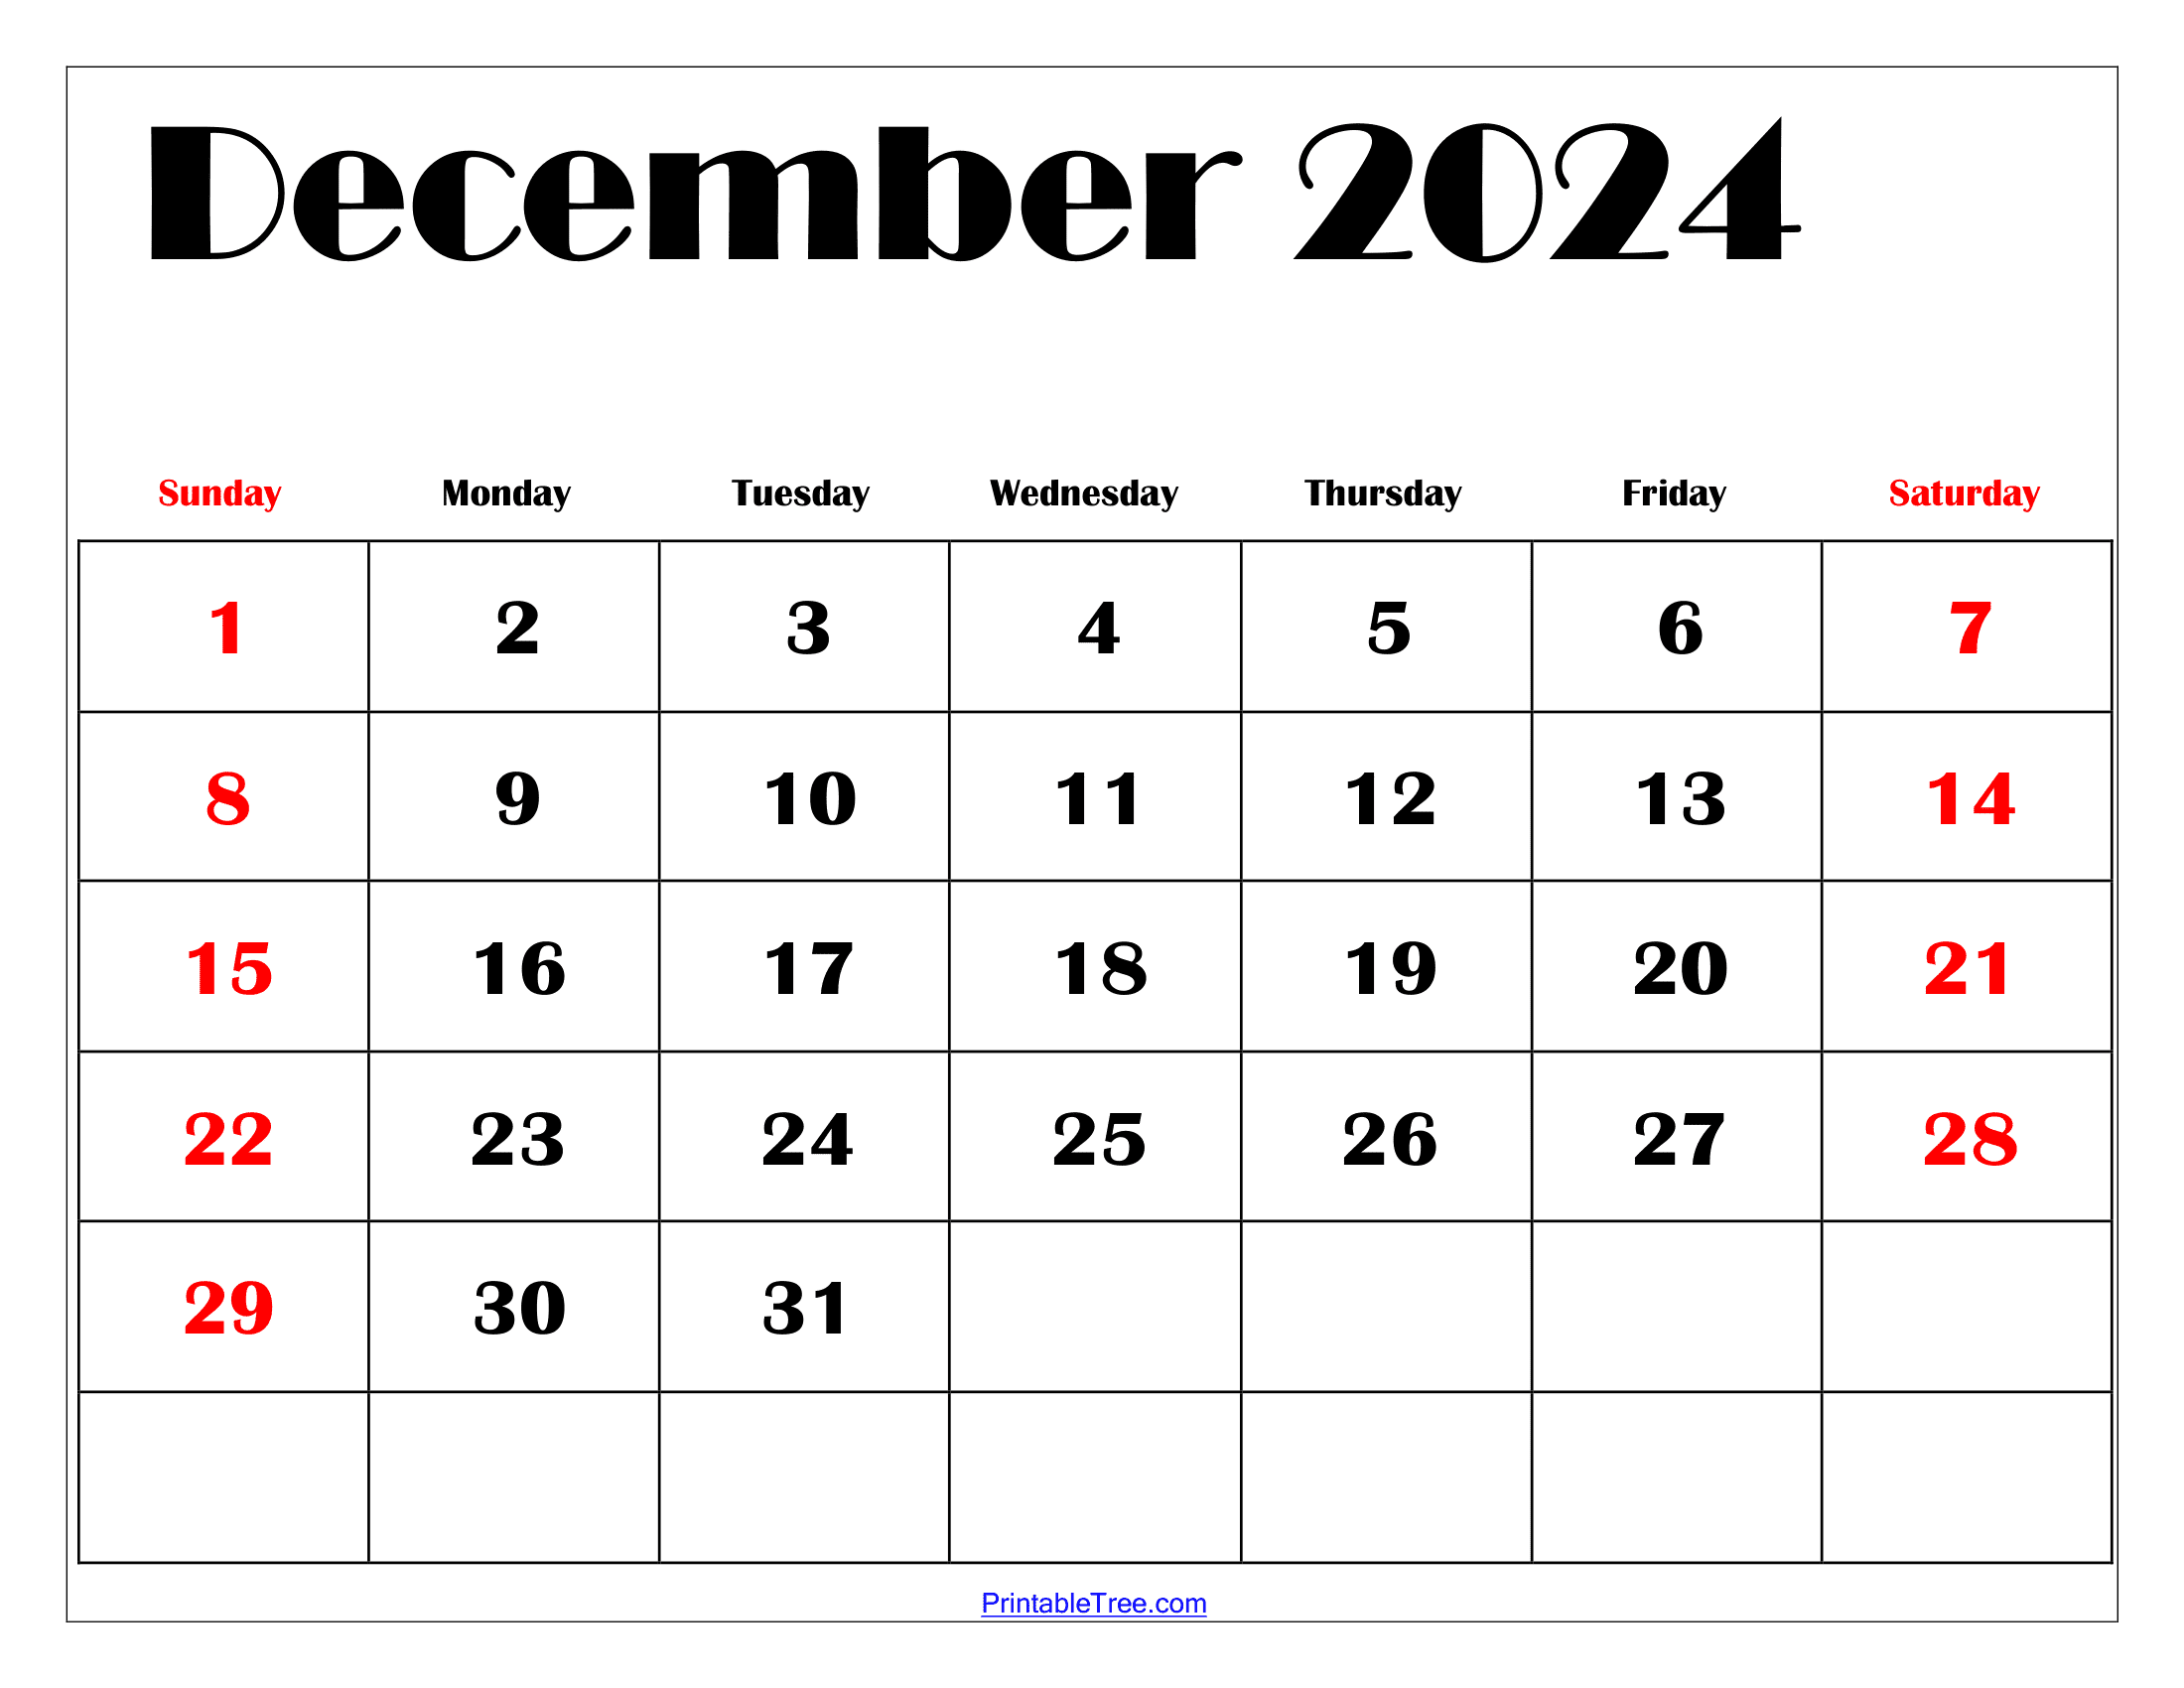 December 2024 Calendar Printable Pdf Blank Free Templates for Free Printable Calendar 2024 December